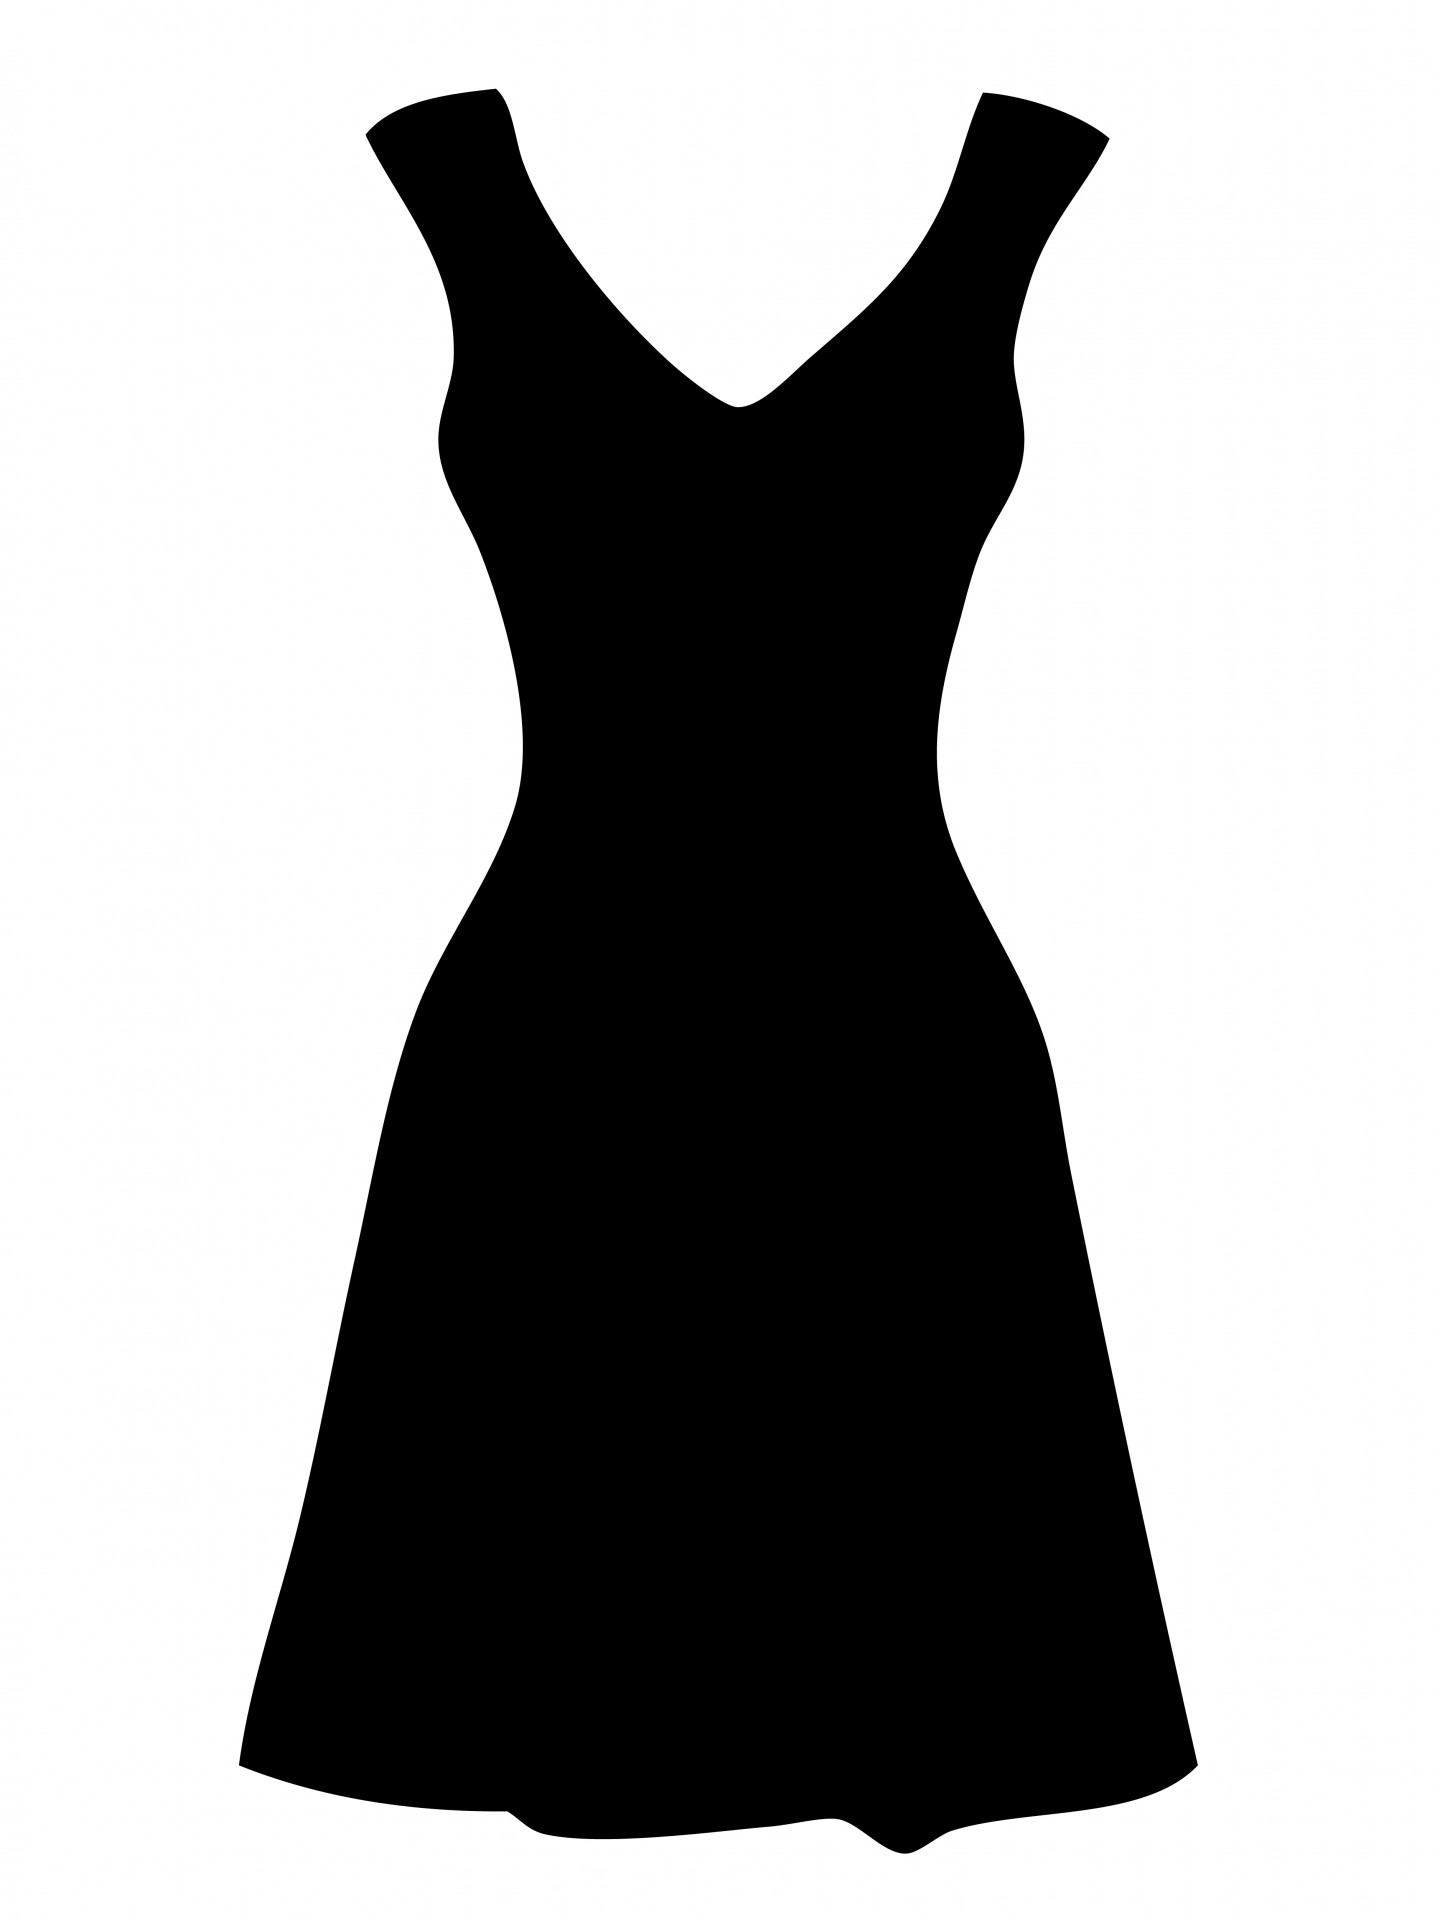 Black Dress Clipart Free Stock Photo - Public Domain Pictures